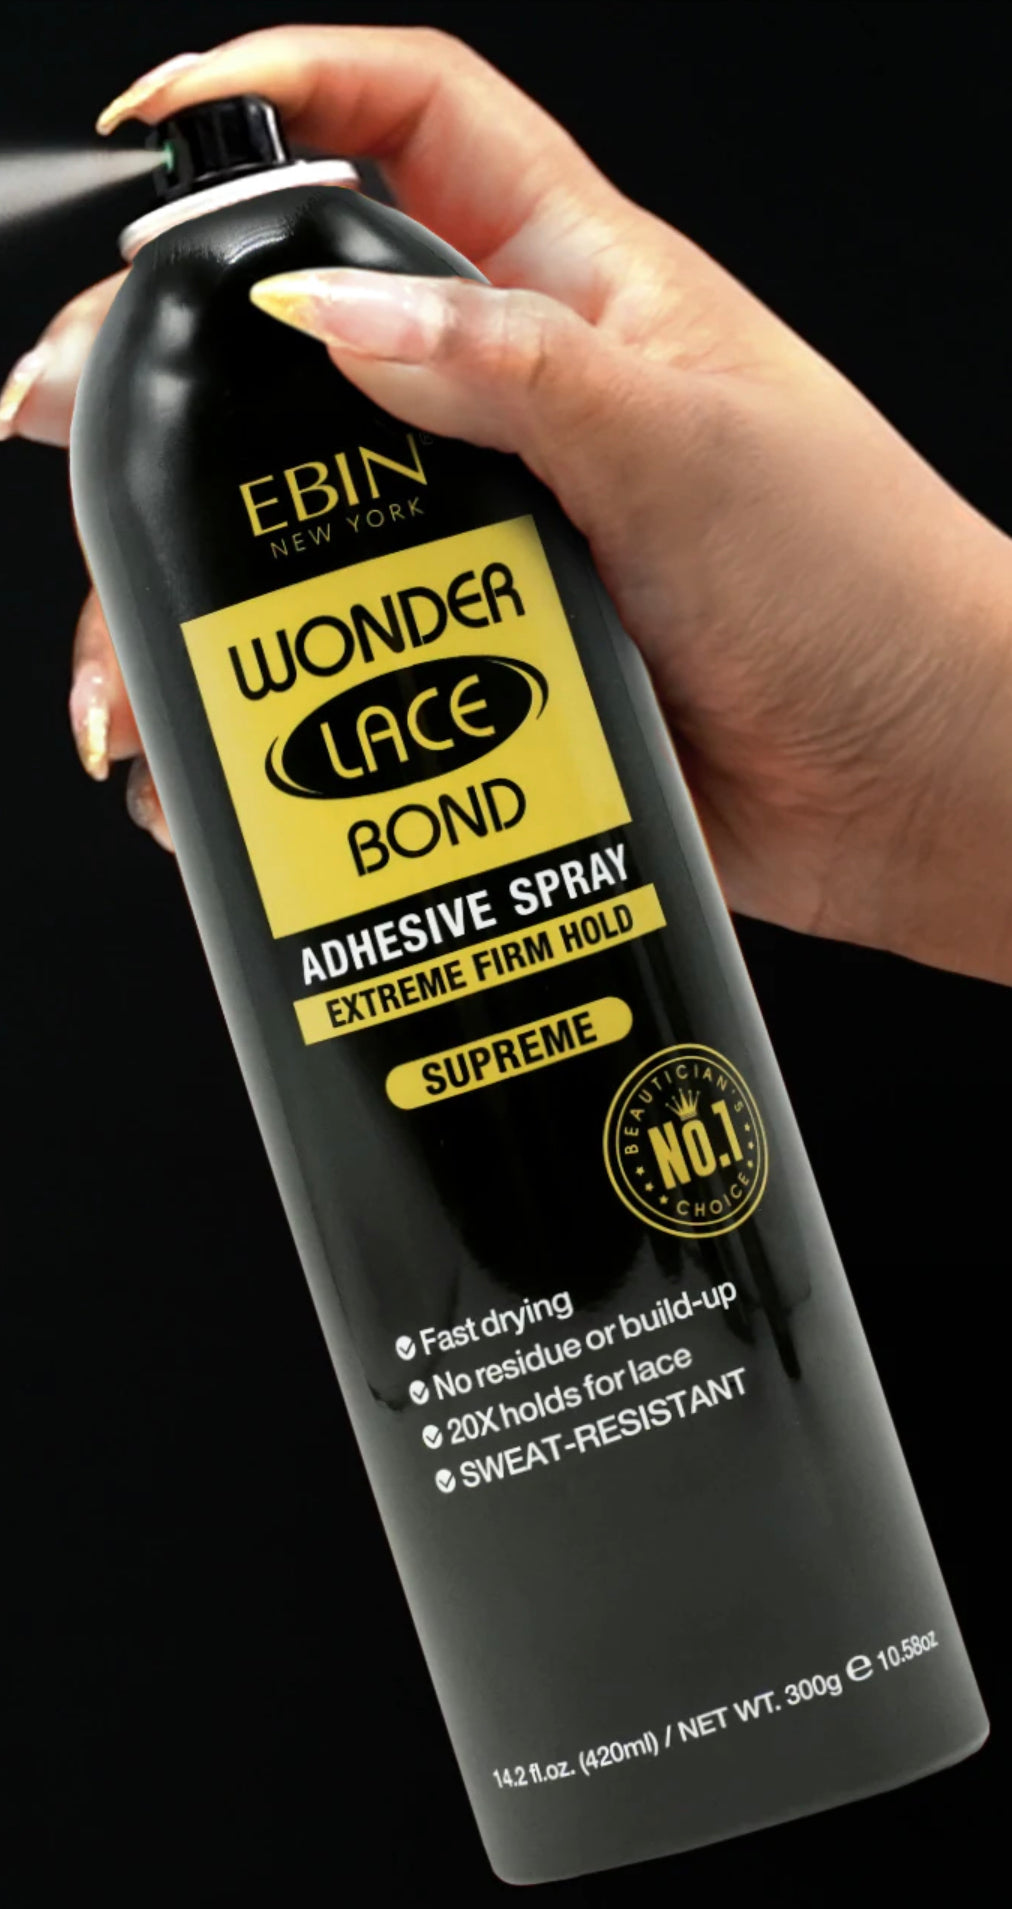 Ebin Wonder Lace Bond Wig Adhesive Spray Extreme Firm Hold